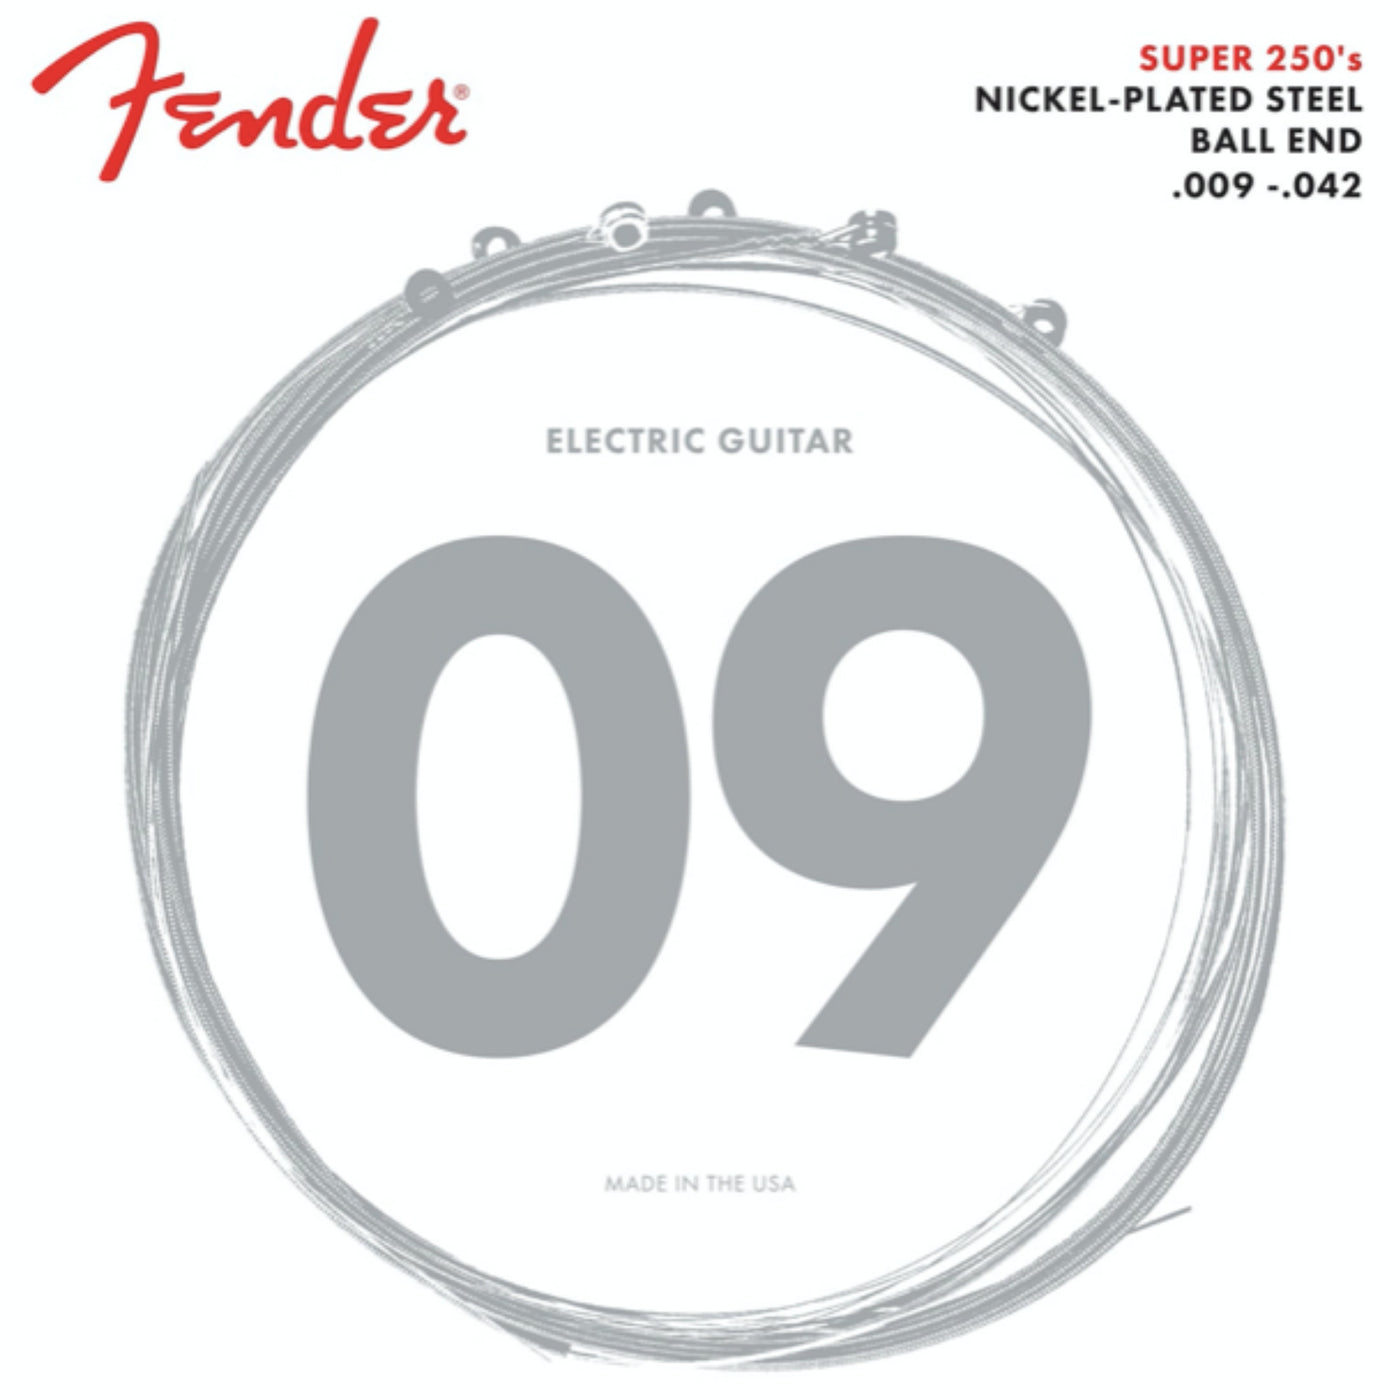 Fender Super 250's Nickel-Plated Steel Ball End Electric Guitar Strings, Gauges .009-.042 (0730250403)